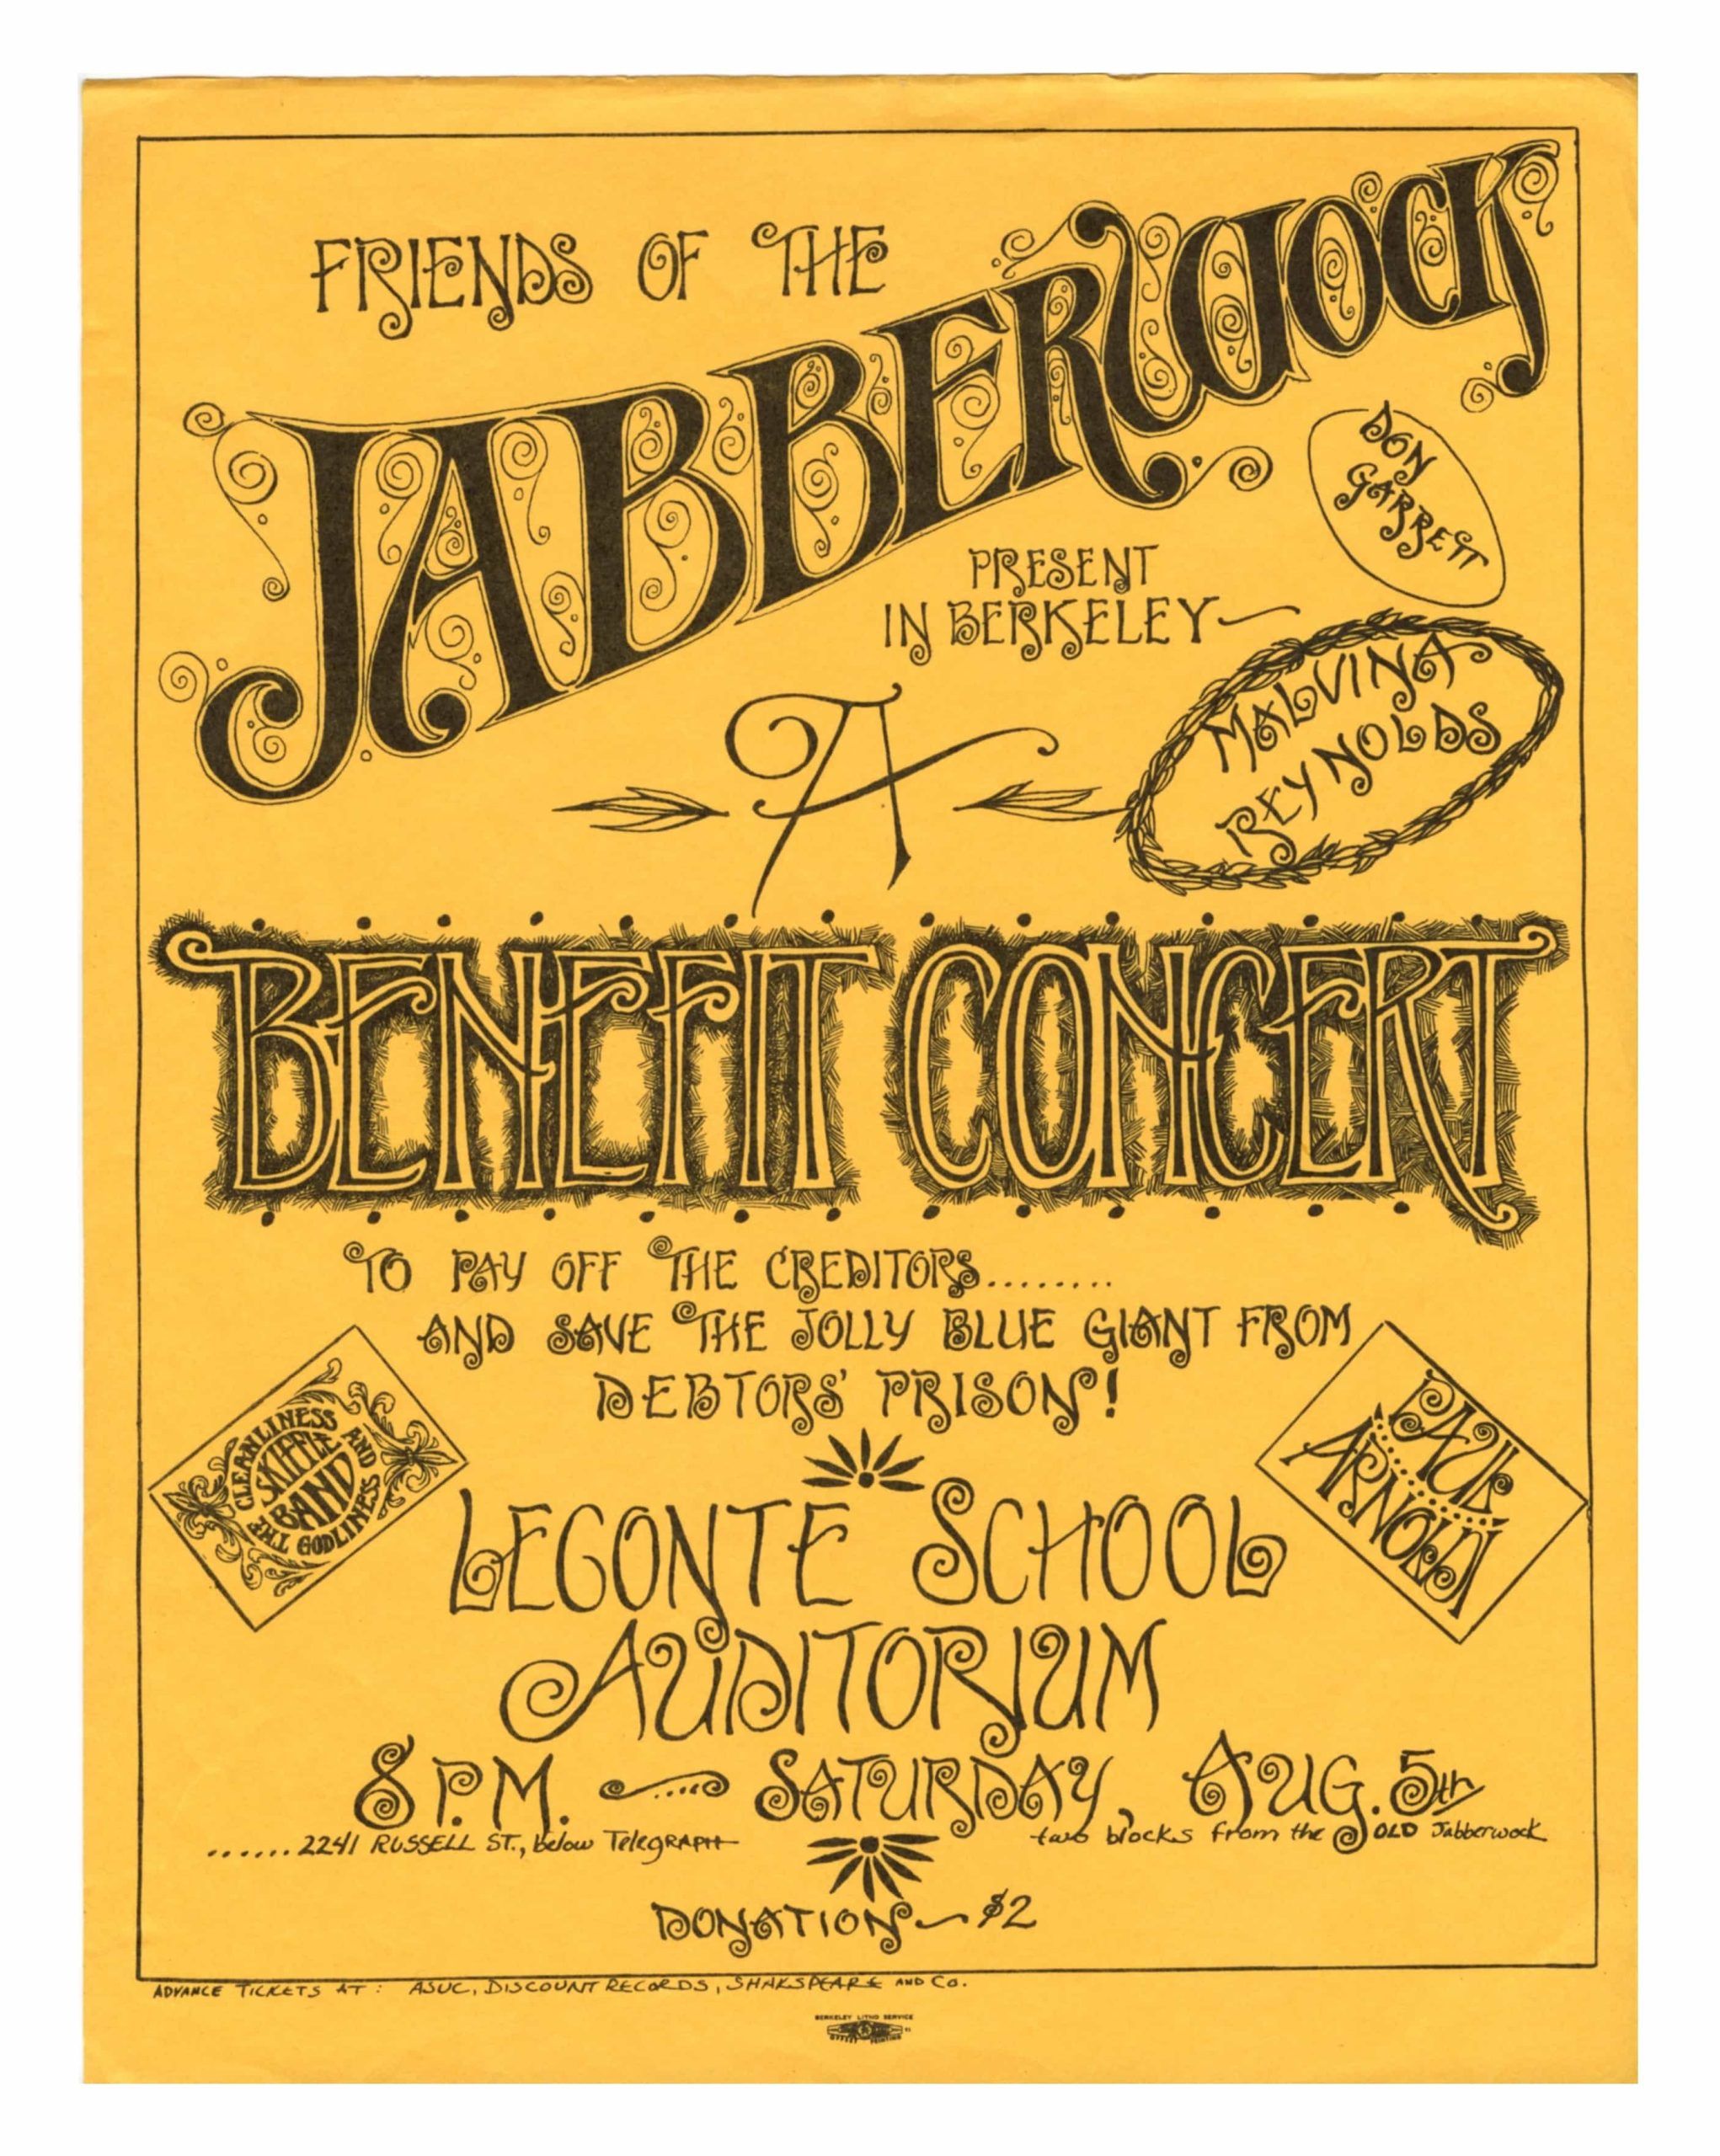 Dan Garrett Handbill Malvina Reynolds 1967 Aug 5 Berkeley Jabberwock present